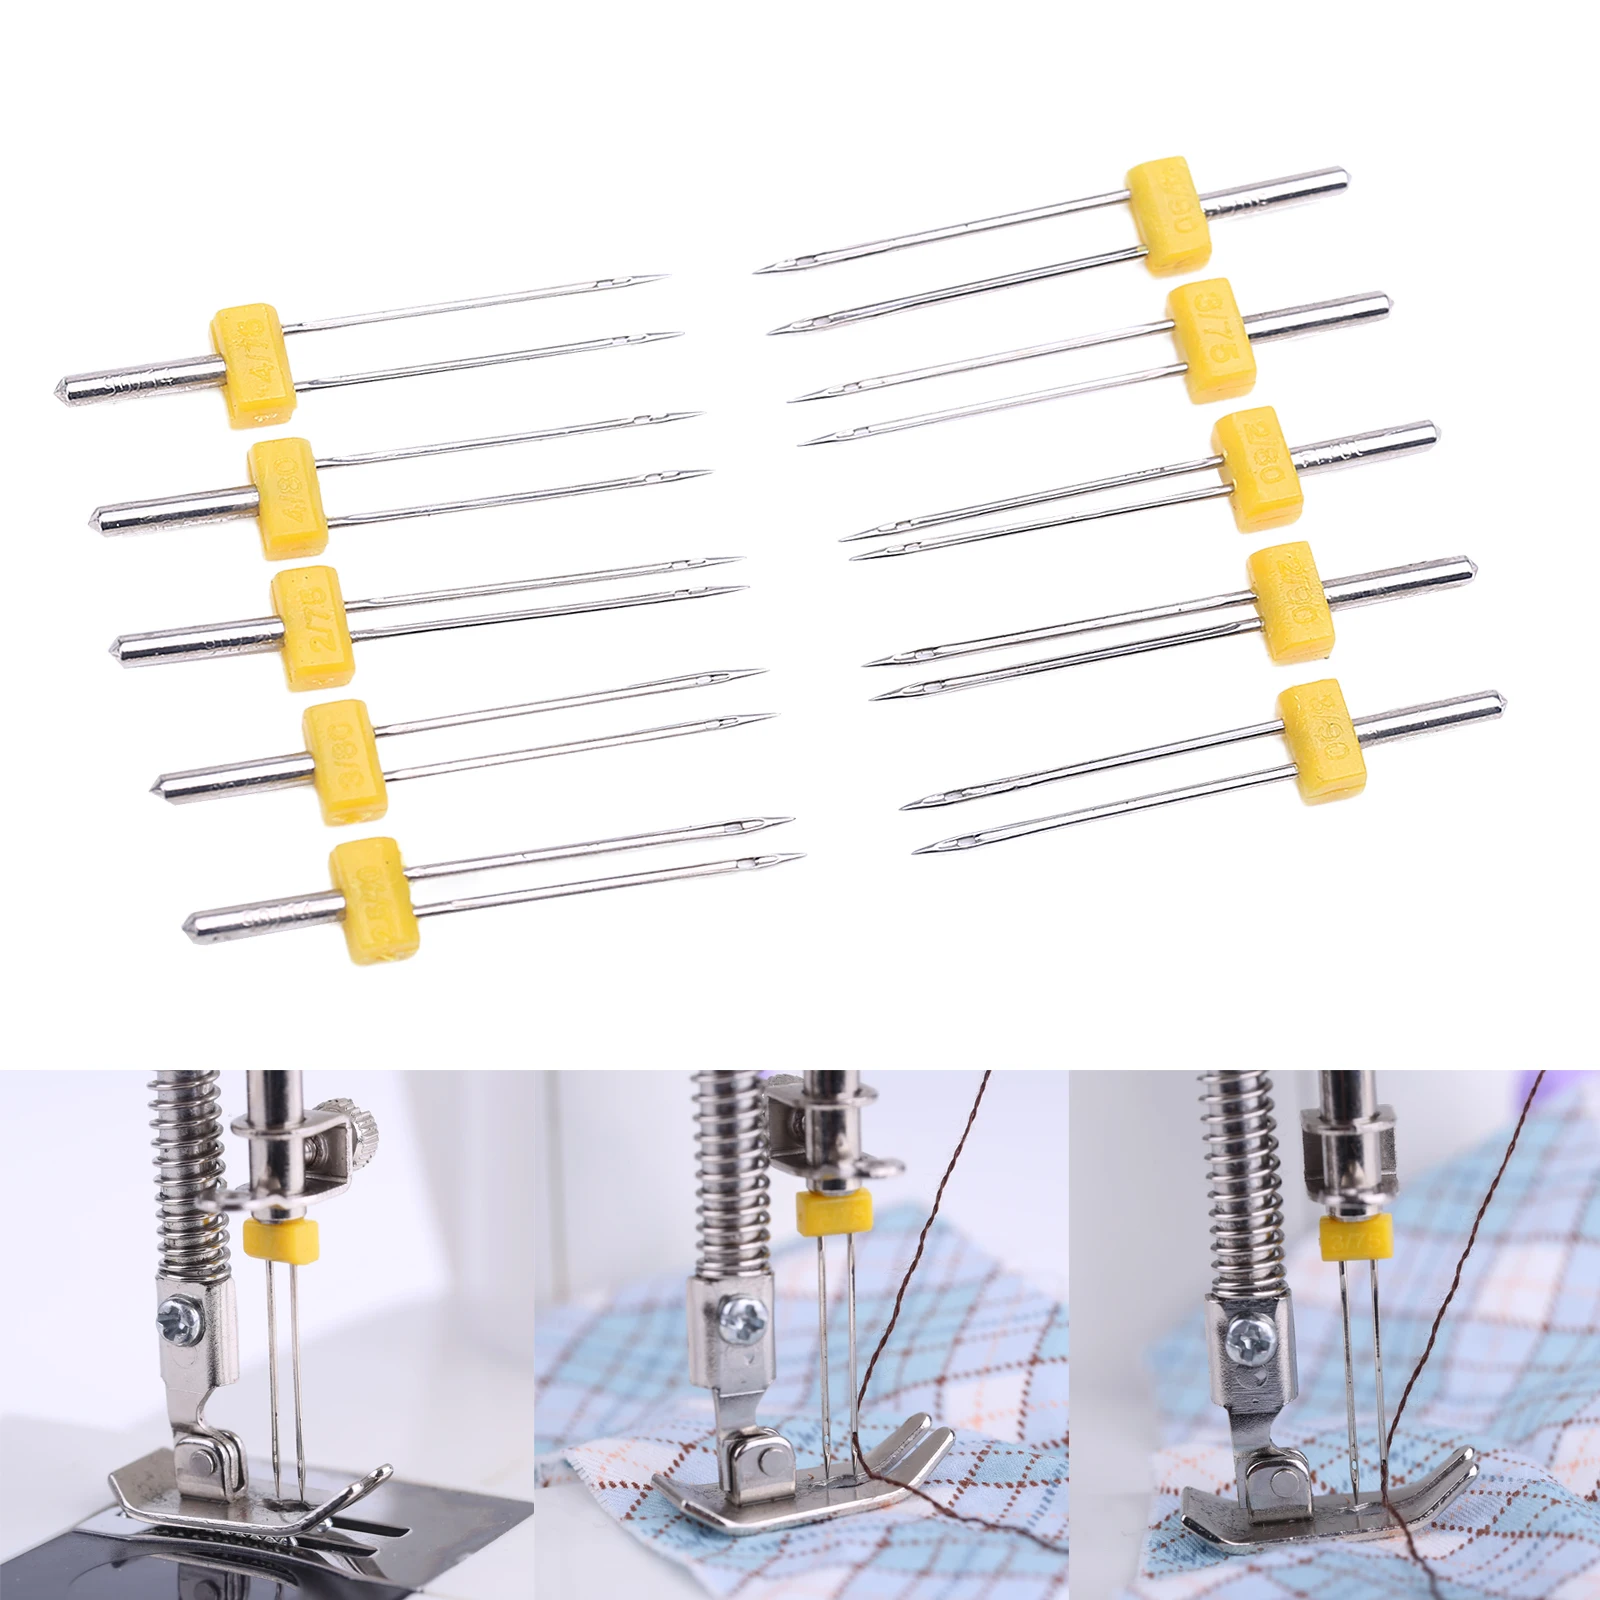 10pcs Durable Double Needles Pins Twin Stretch Machine Needles Mix